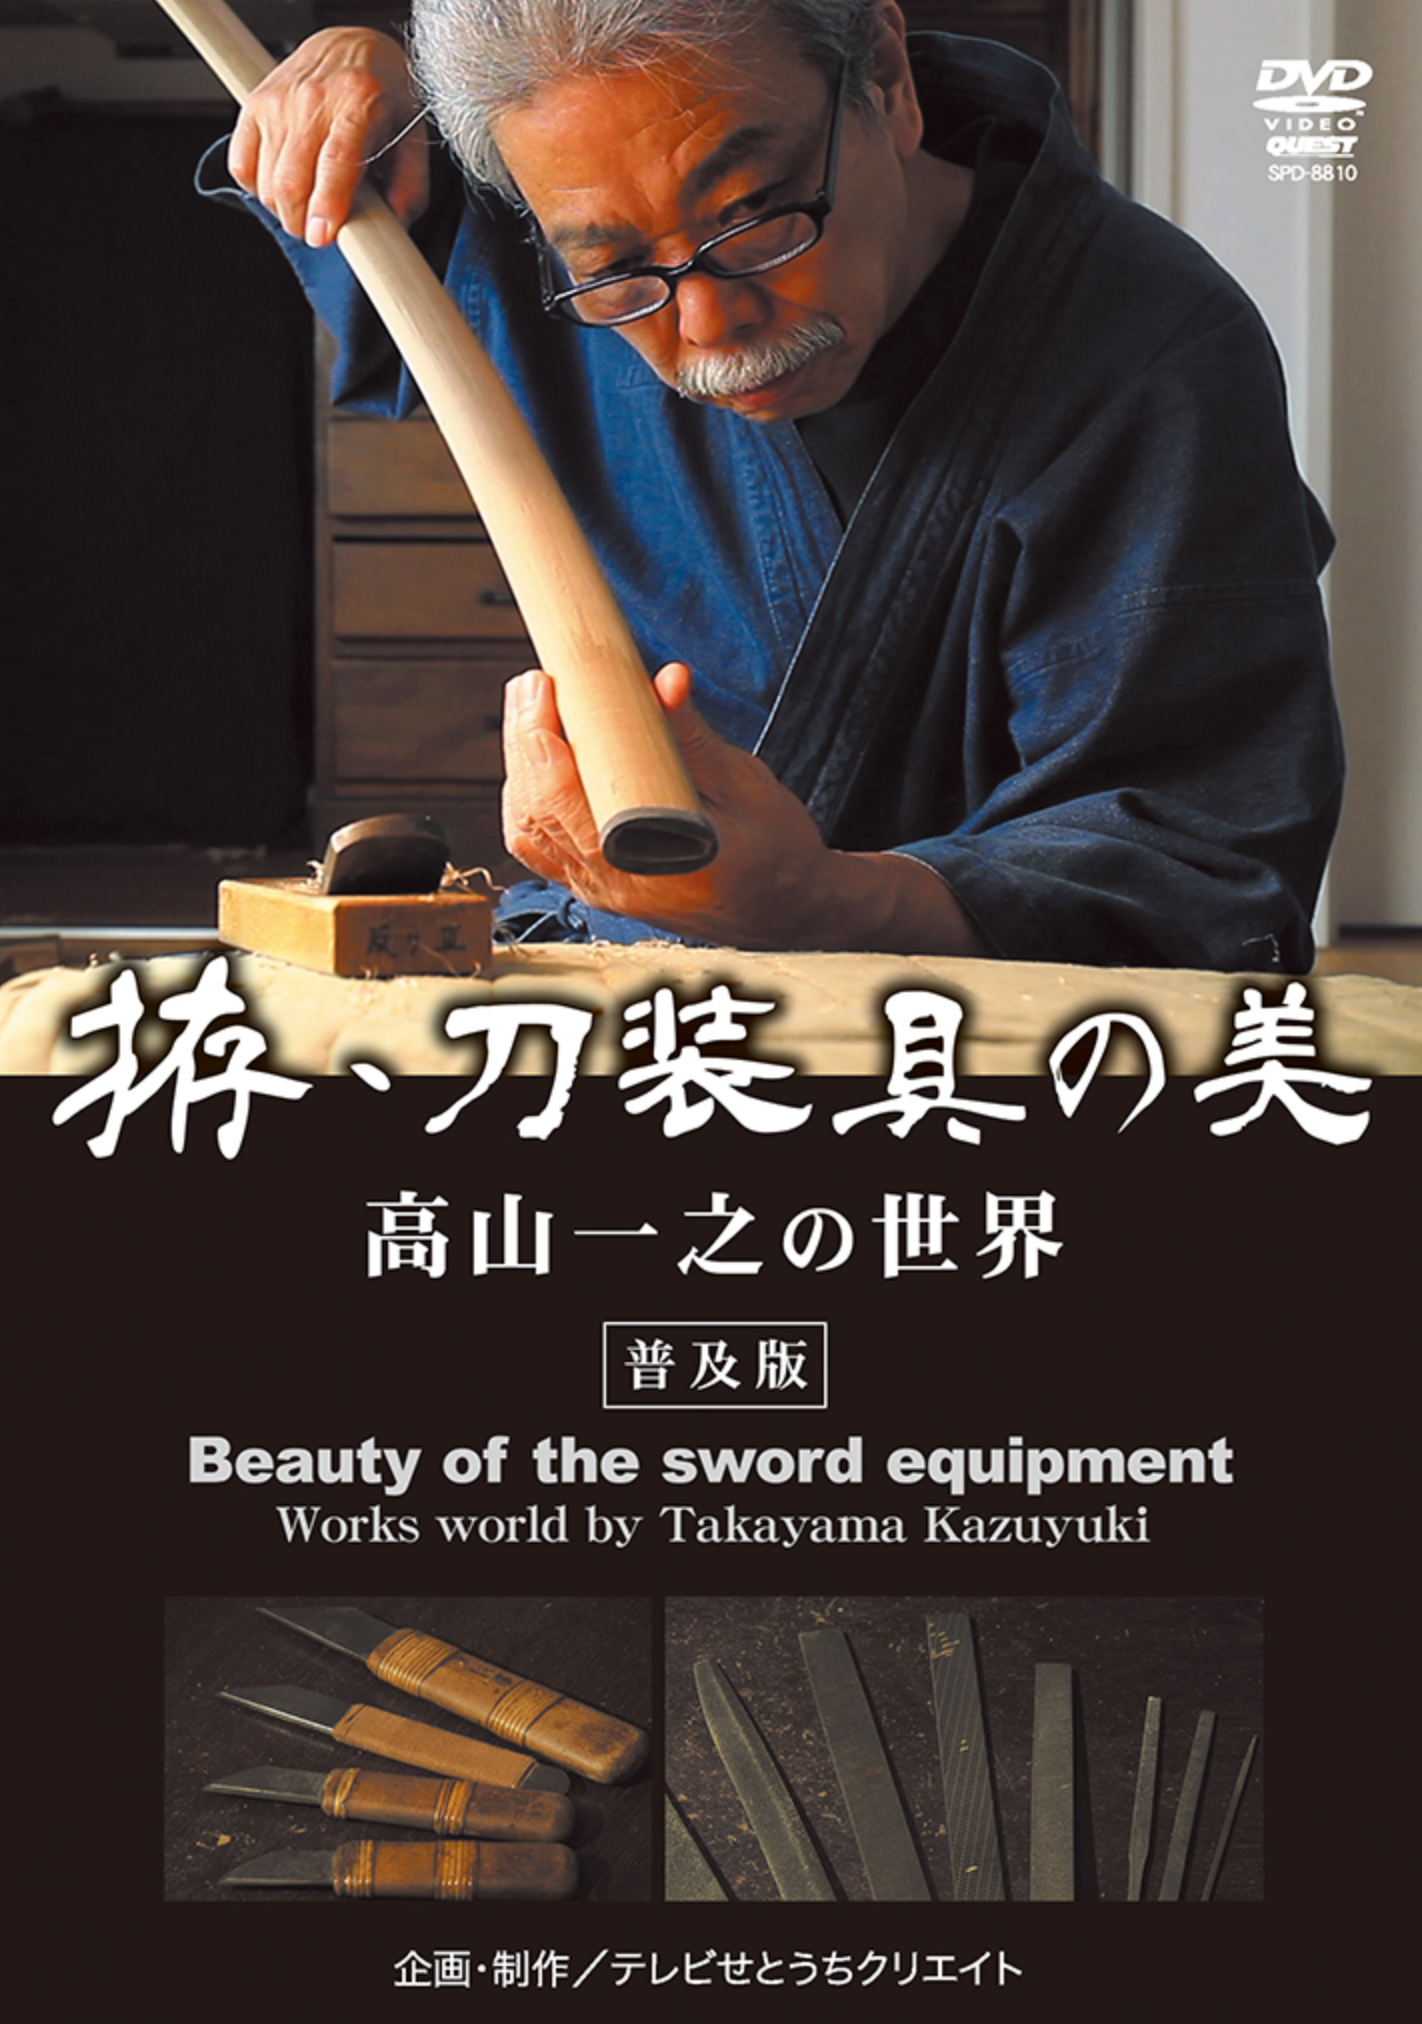 Beauty of the Sword Equipment DVD with Kazuyuki Takayama - Budovideos Inc